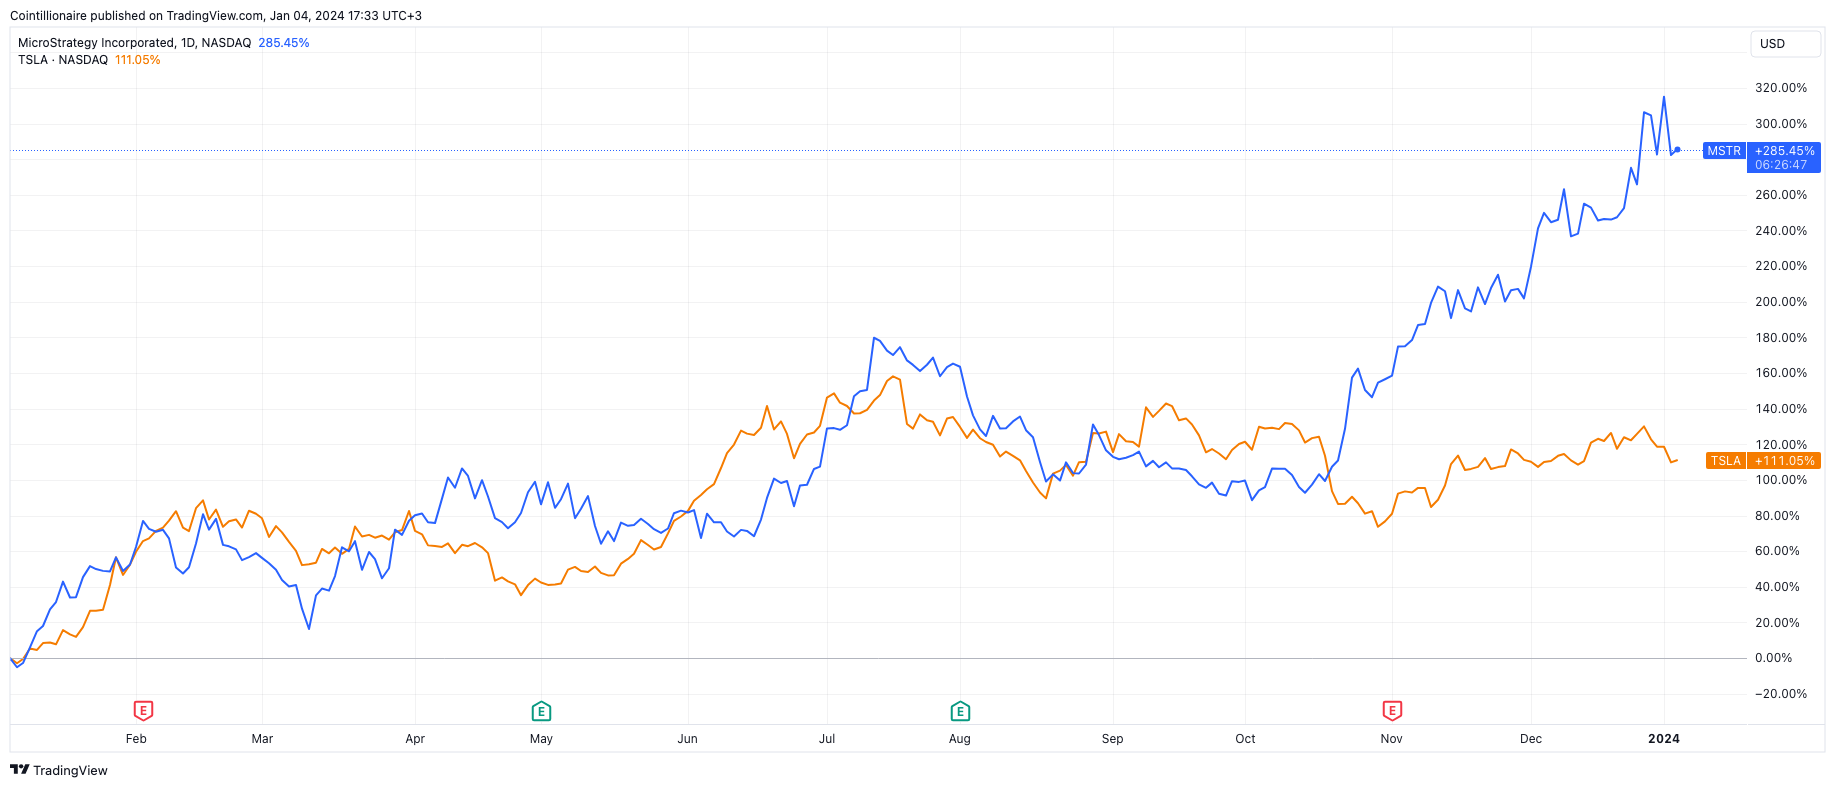 MicroStrategy vs. Tesla stock price (1-year chart)